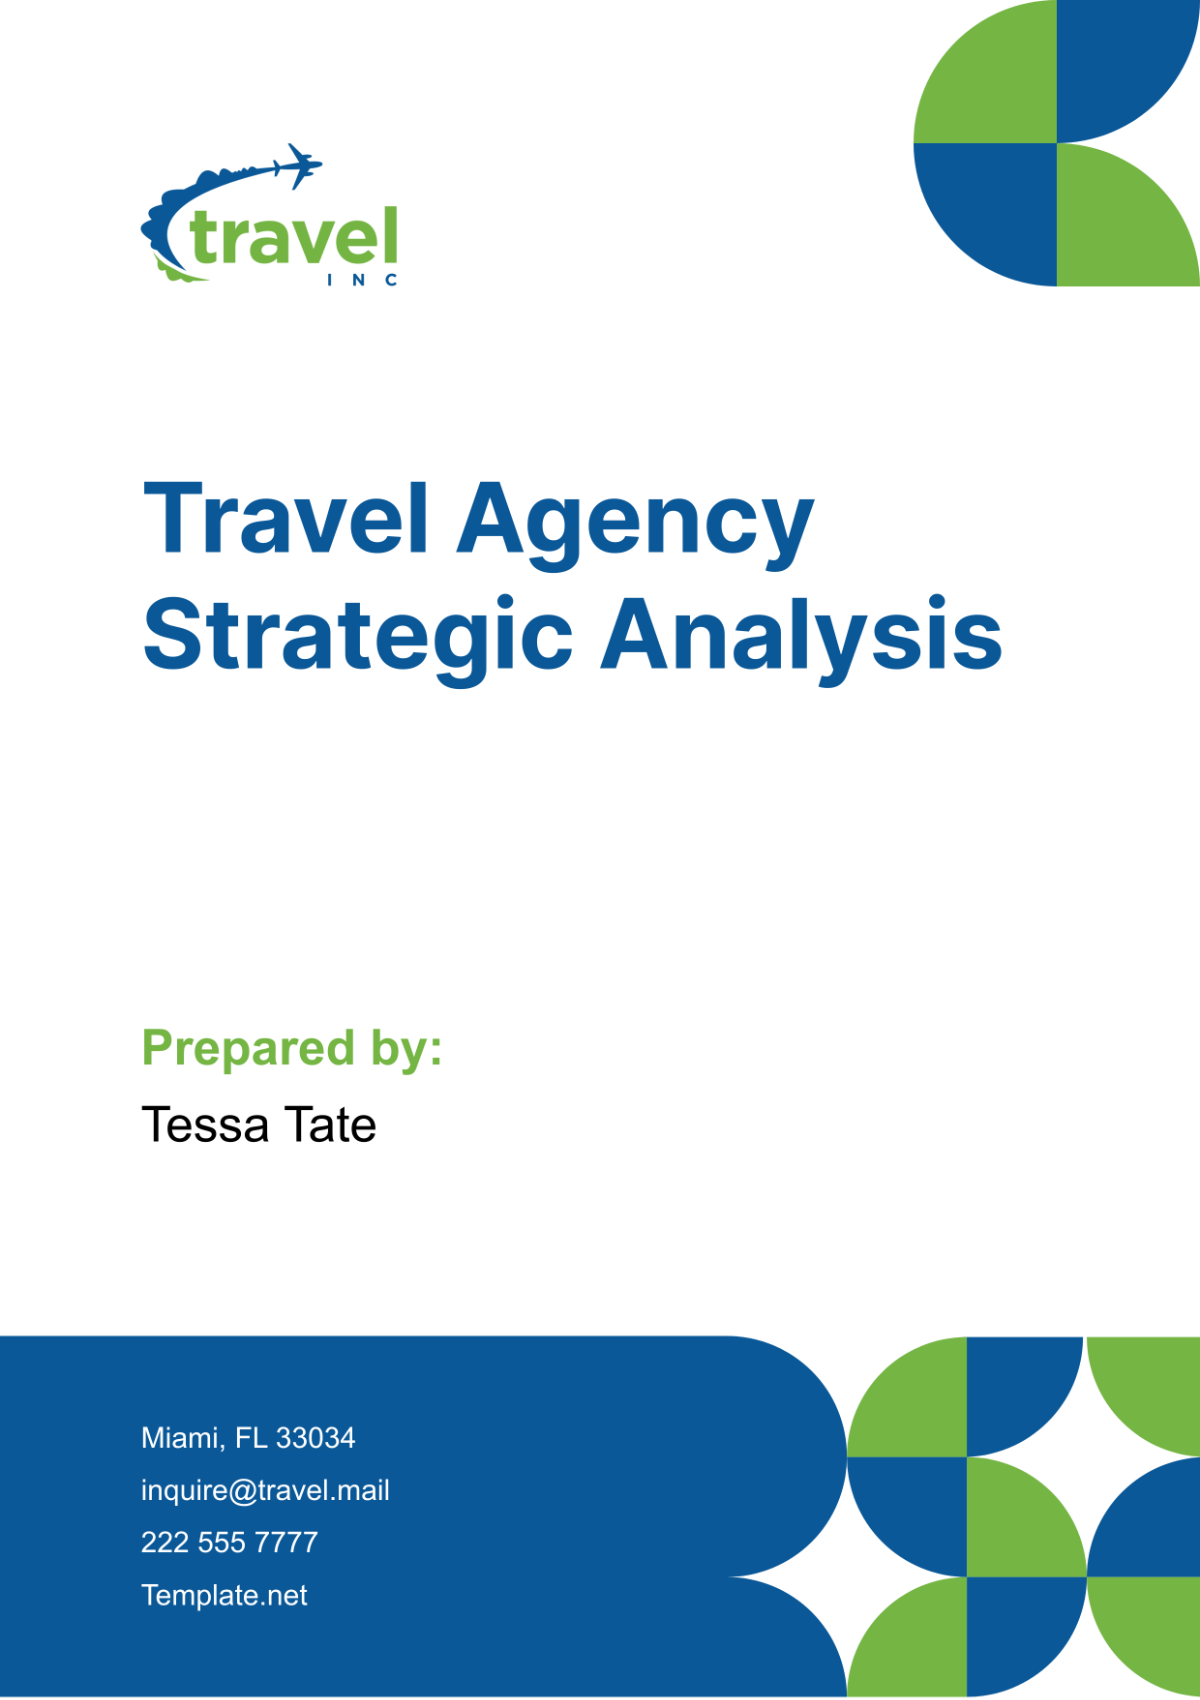 Travel Agency Strategic Analysis Template